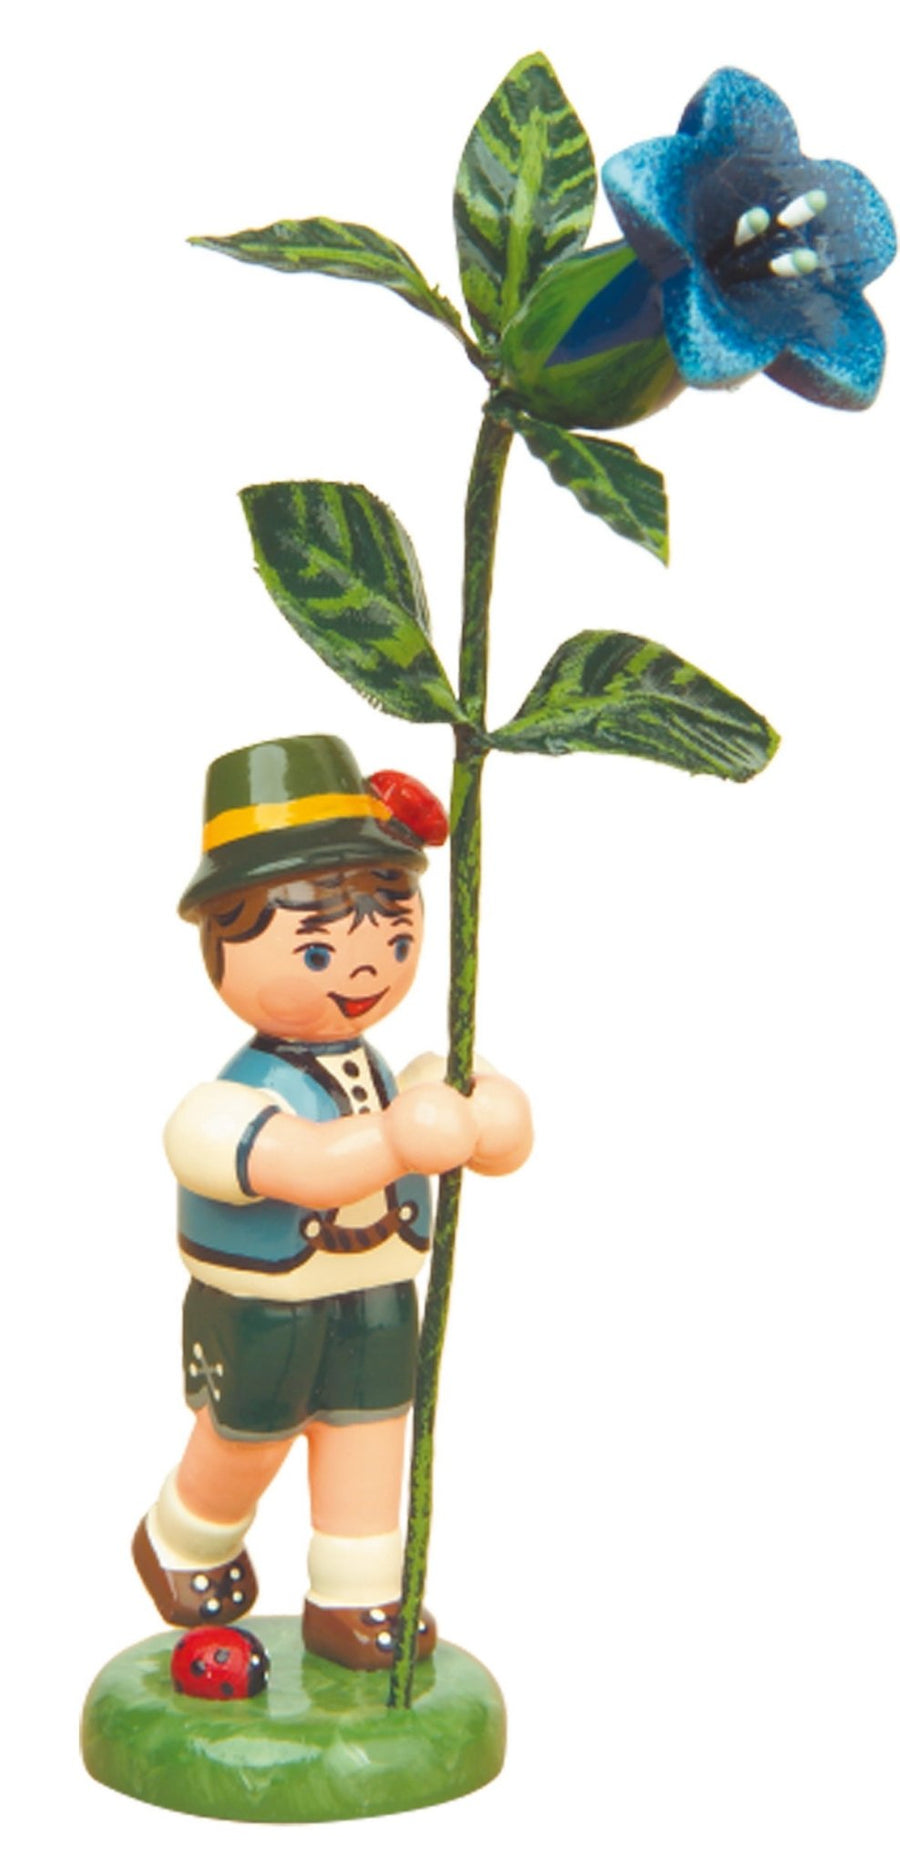 Hubrig Volkskunst 'Blumenkinder Junge mit Enzian - 11cm'-HUB-308h0005